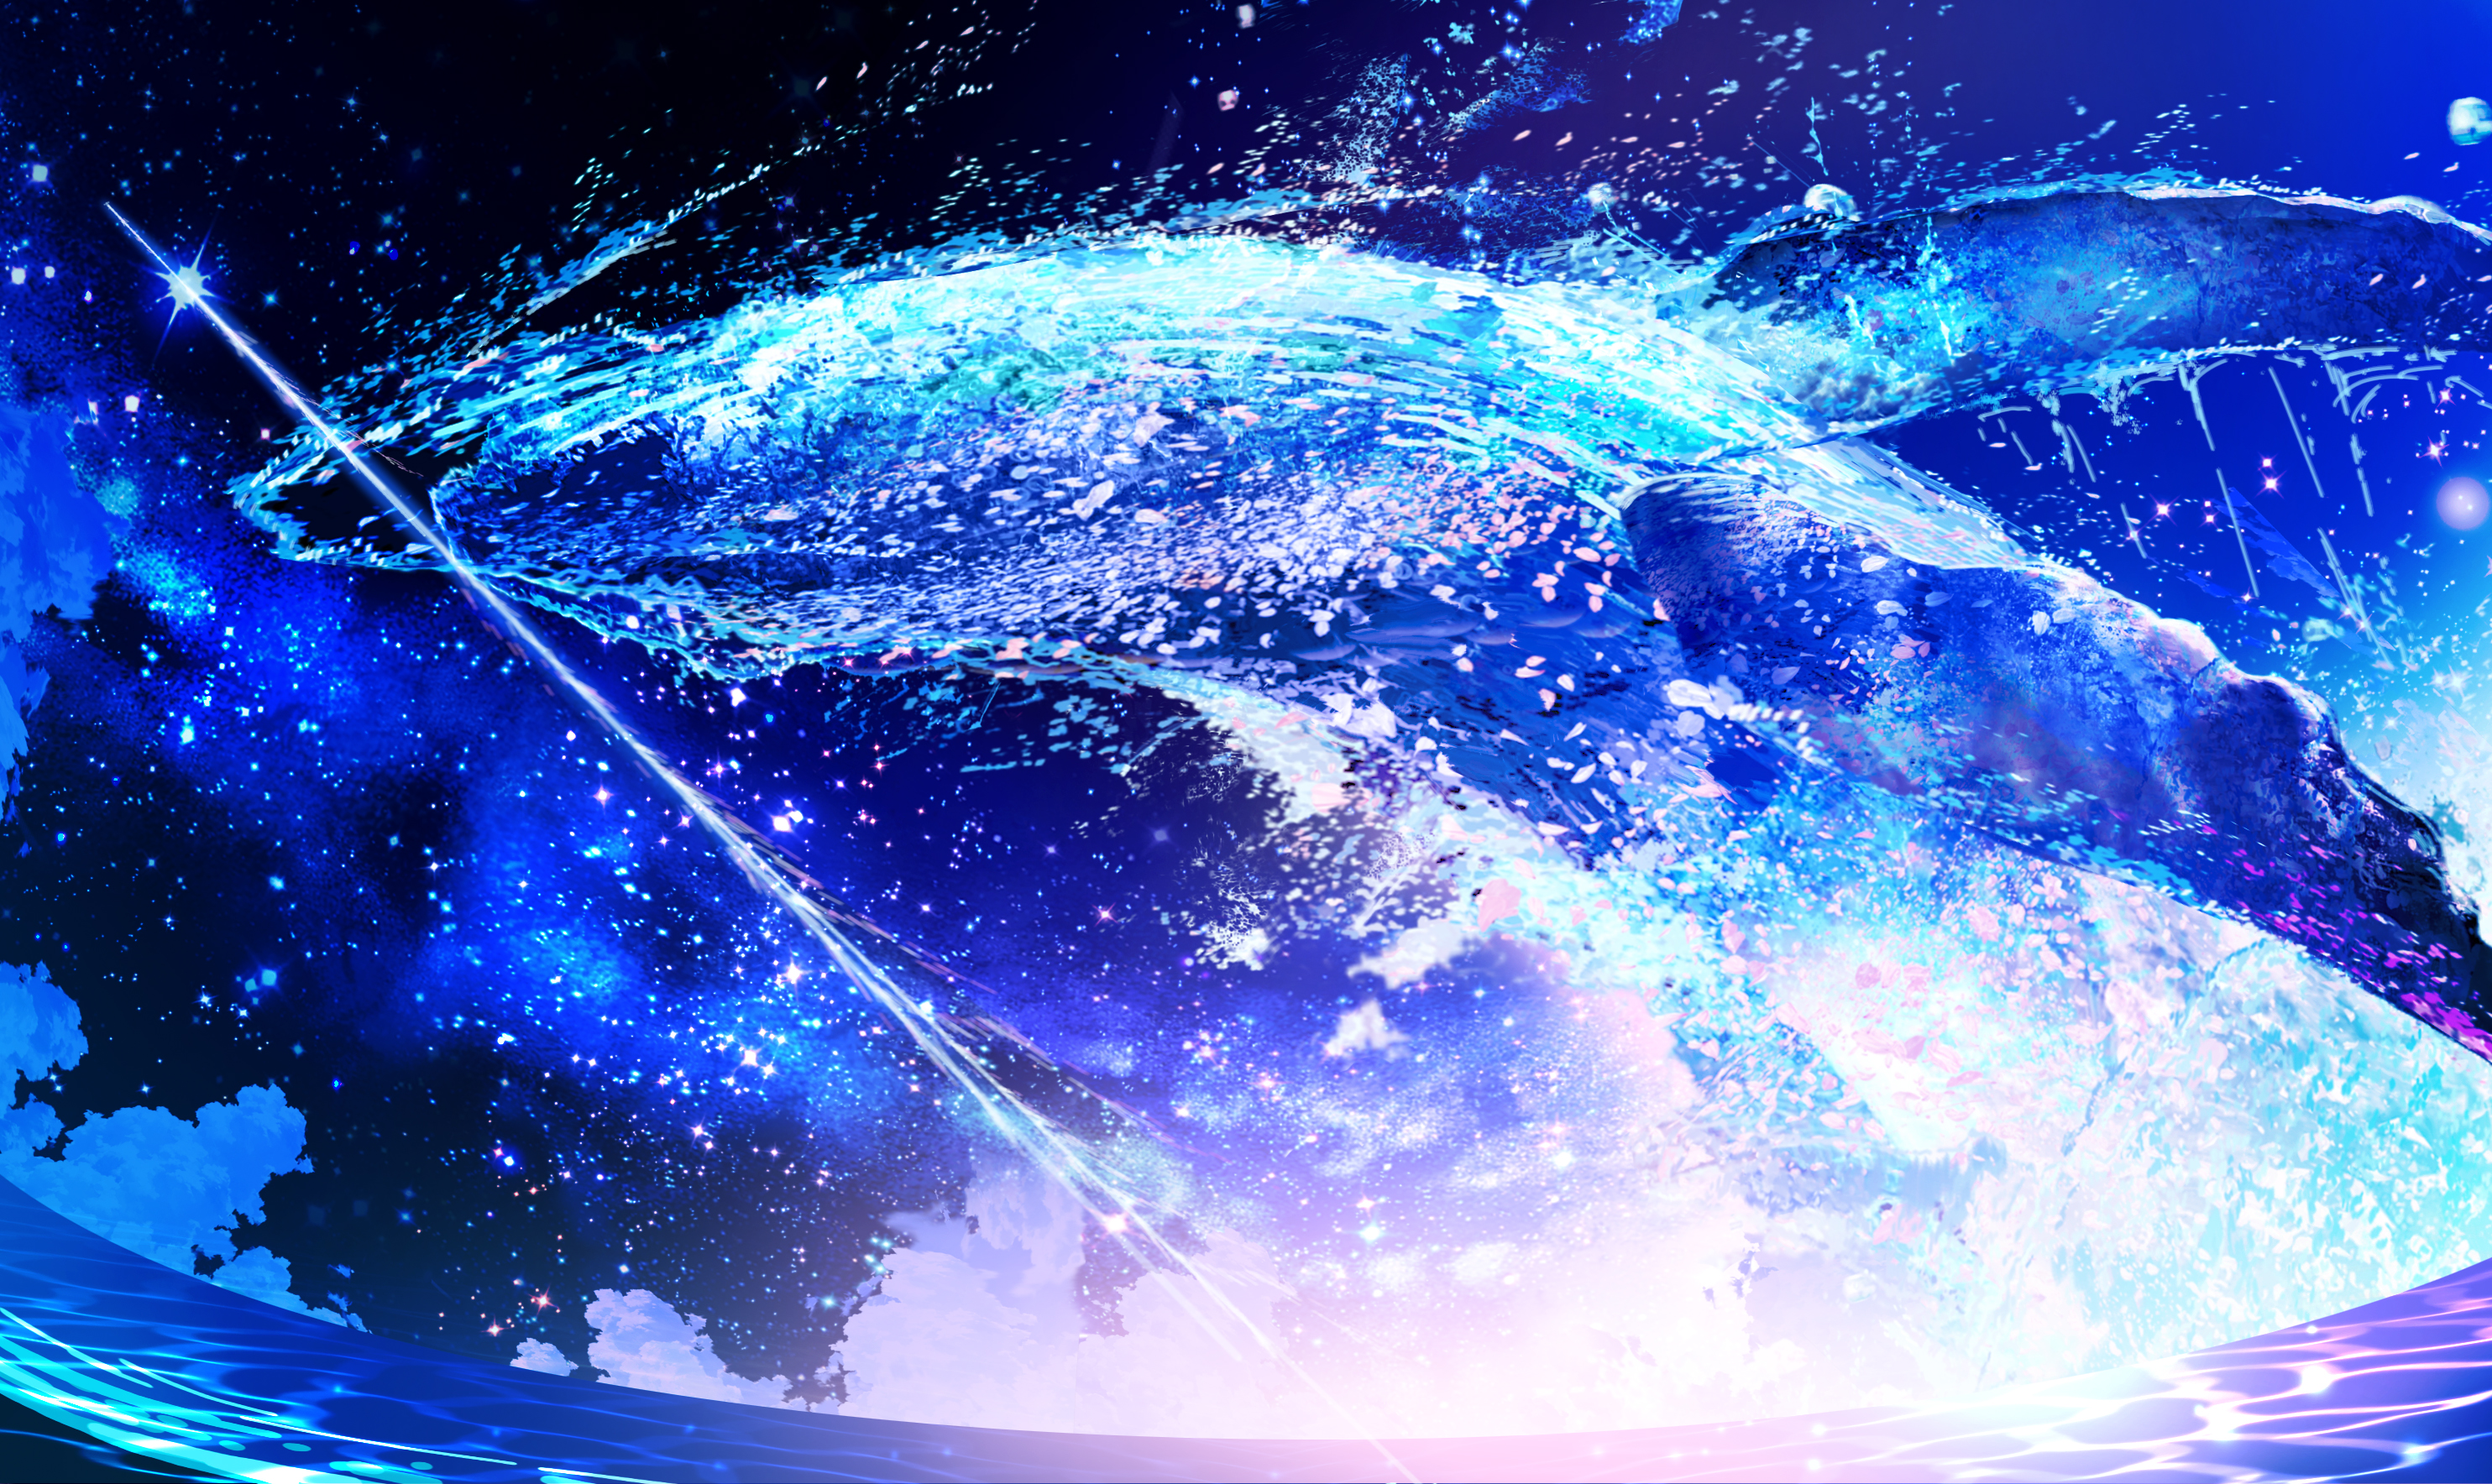 Anime Artwork Animals Whale Stars Clouds Wide Screen Water Makoron117 Sky Flying Whales Horizon 2968x1768